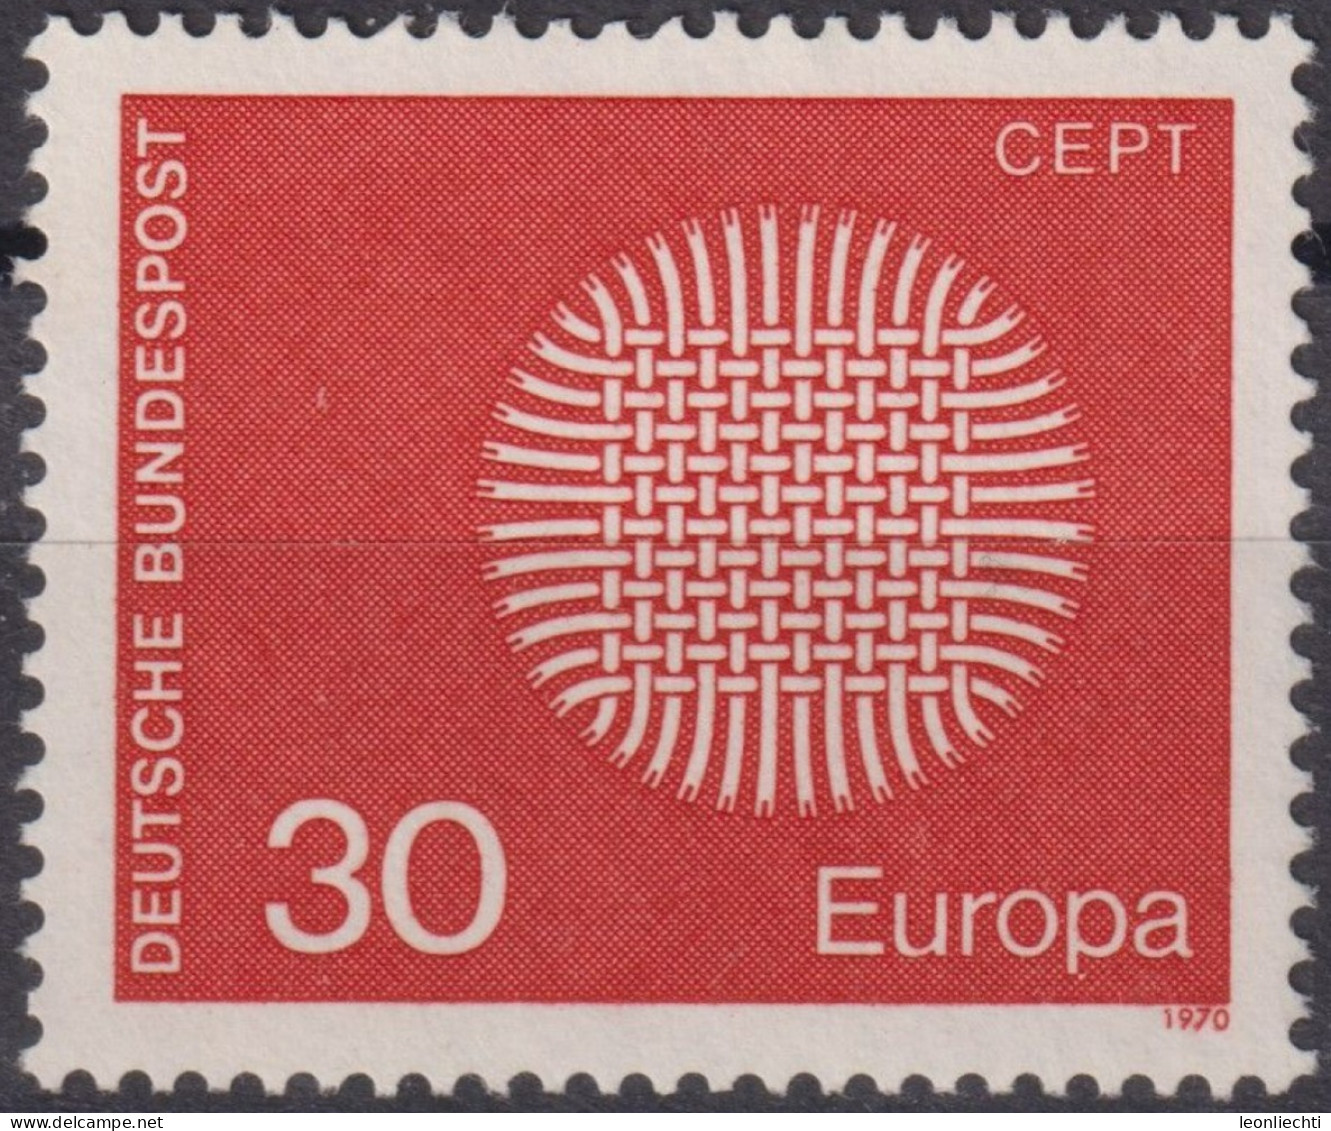 1970 Deutschland > BRD, ** Mi:DE 621, Sn:DE 1019, Yt:DE 484, Europa (C.E.P.T.) 1970 - Lodernde Sonne - 1970